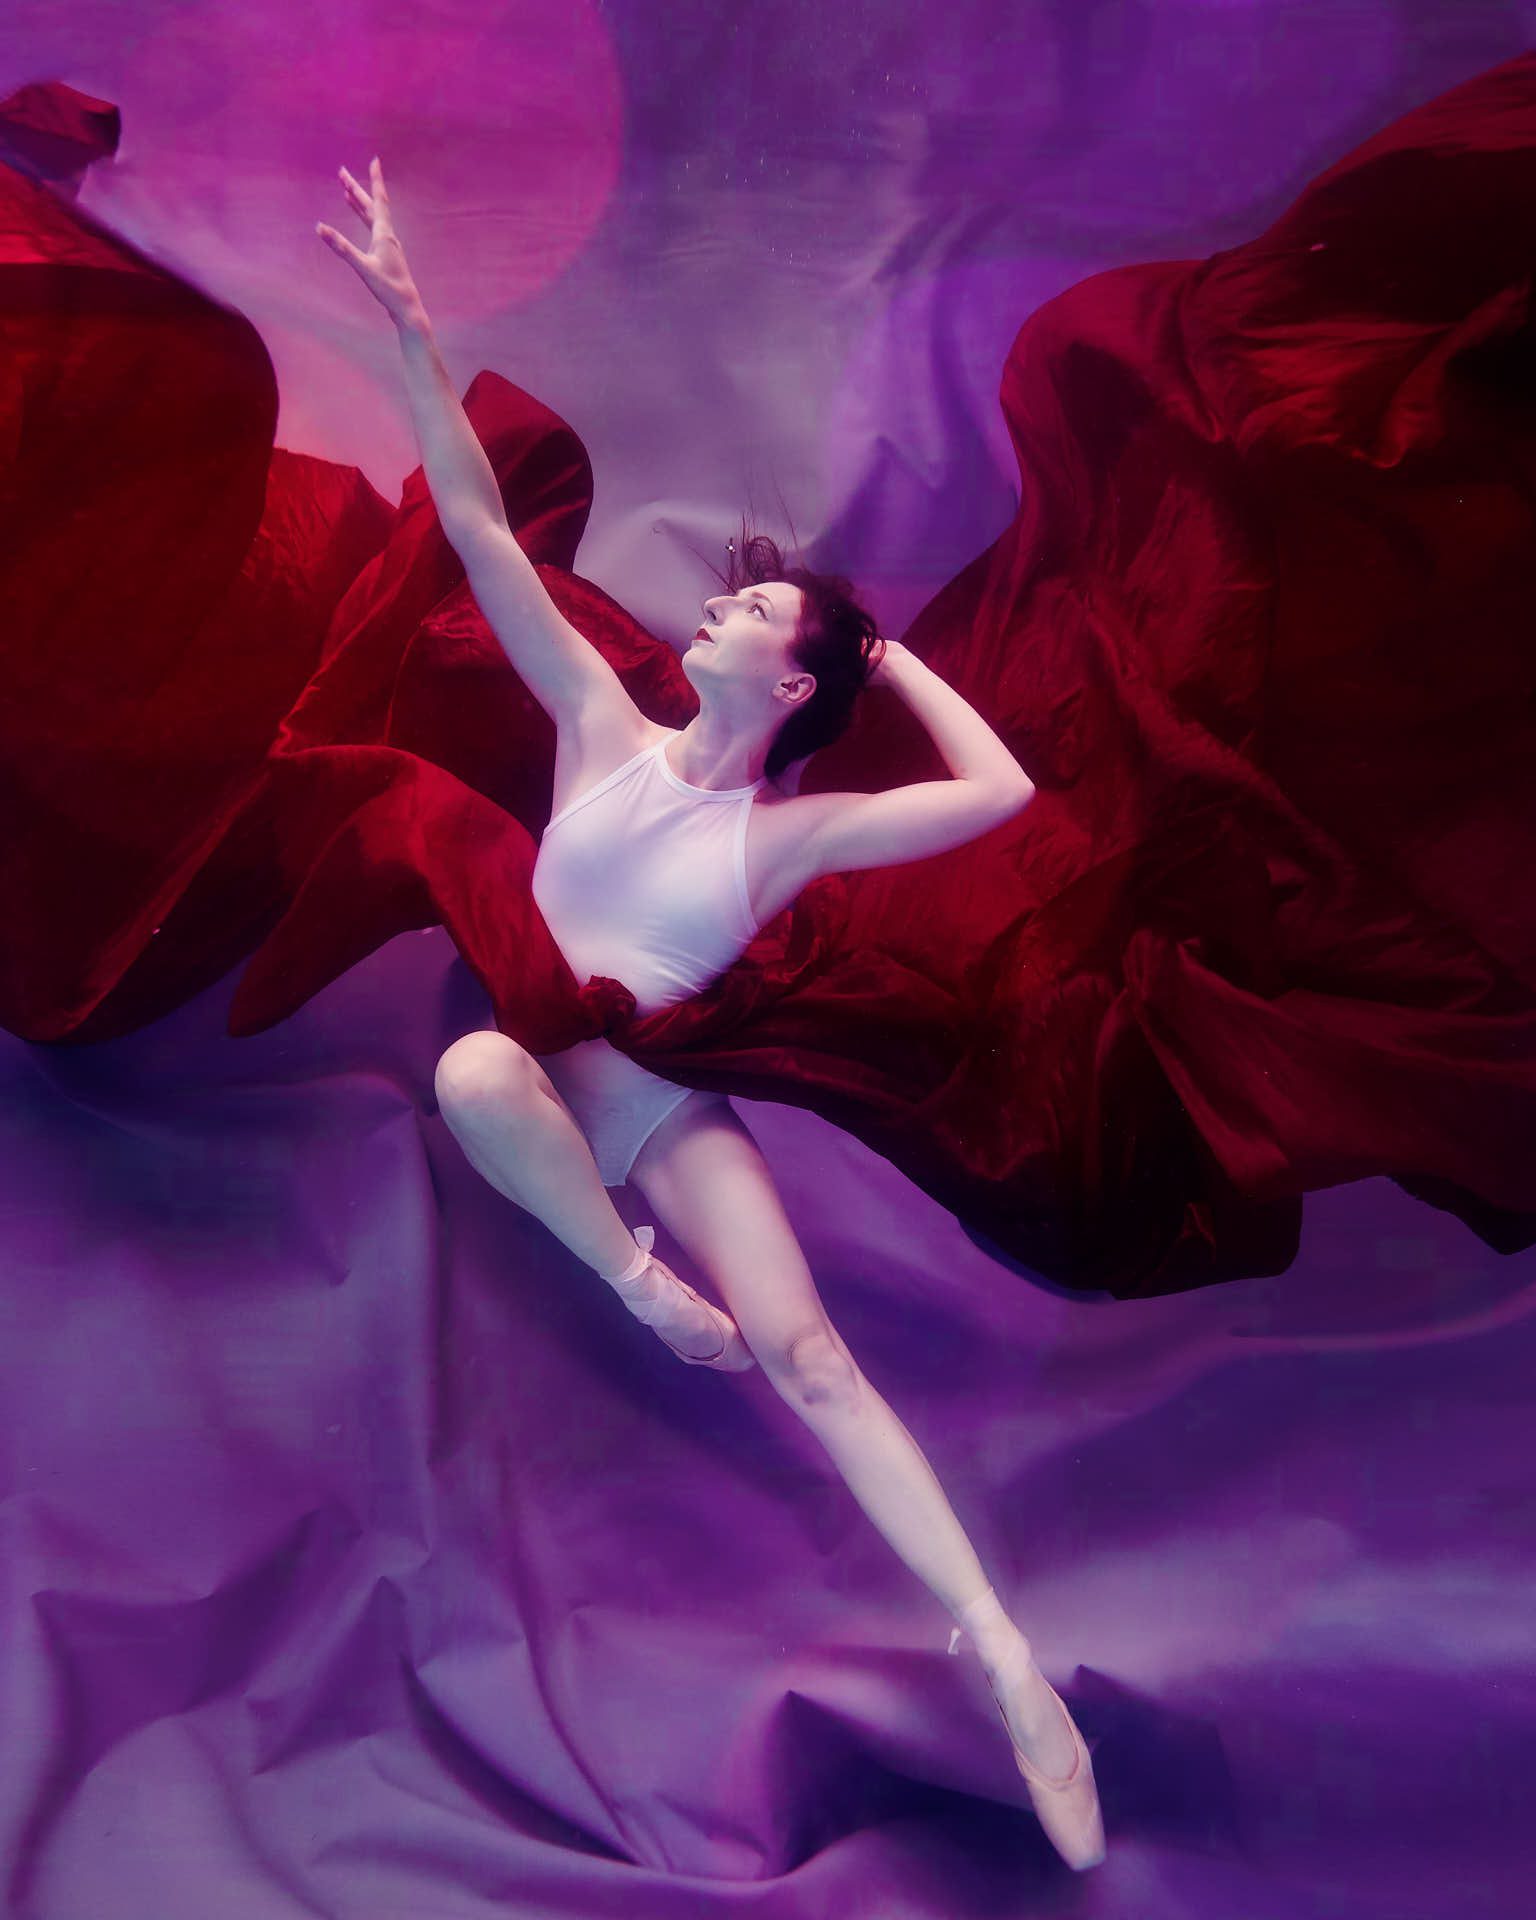 Underwater ballet photoshoot, purple backdrop, red fabric, white leotard, ballet, ballet shoes, en pointe